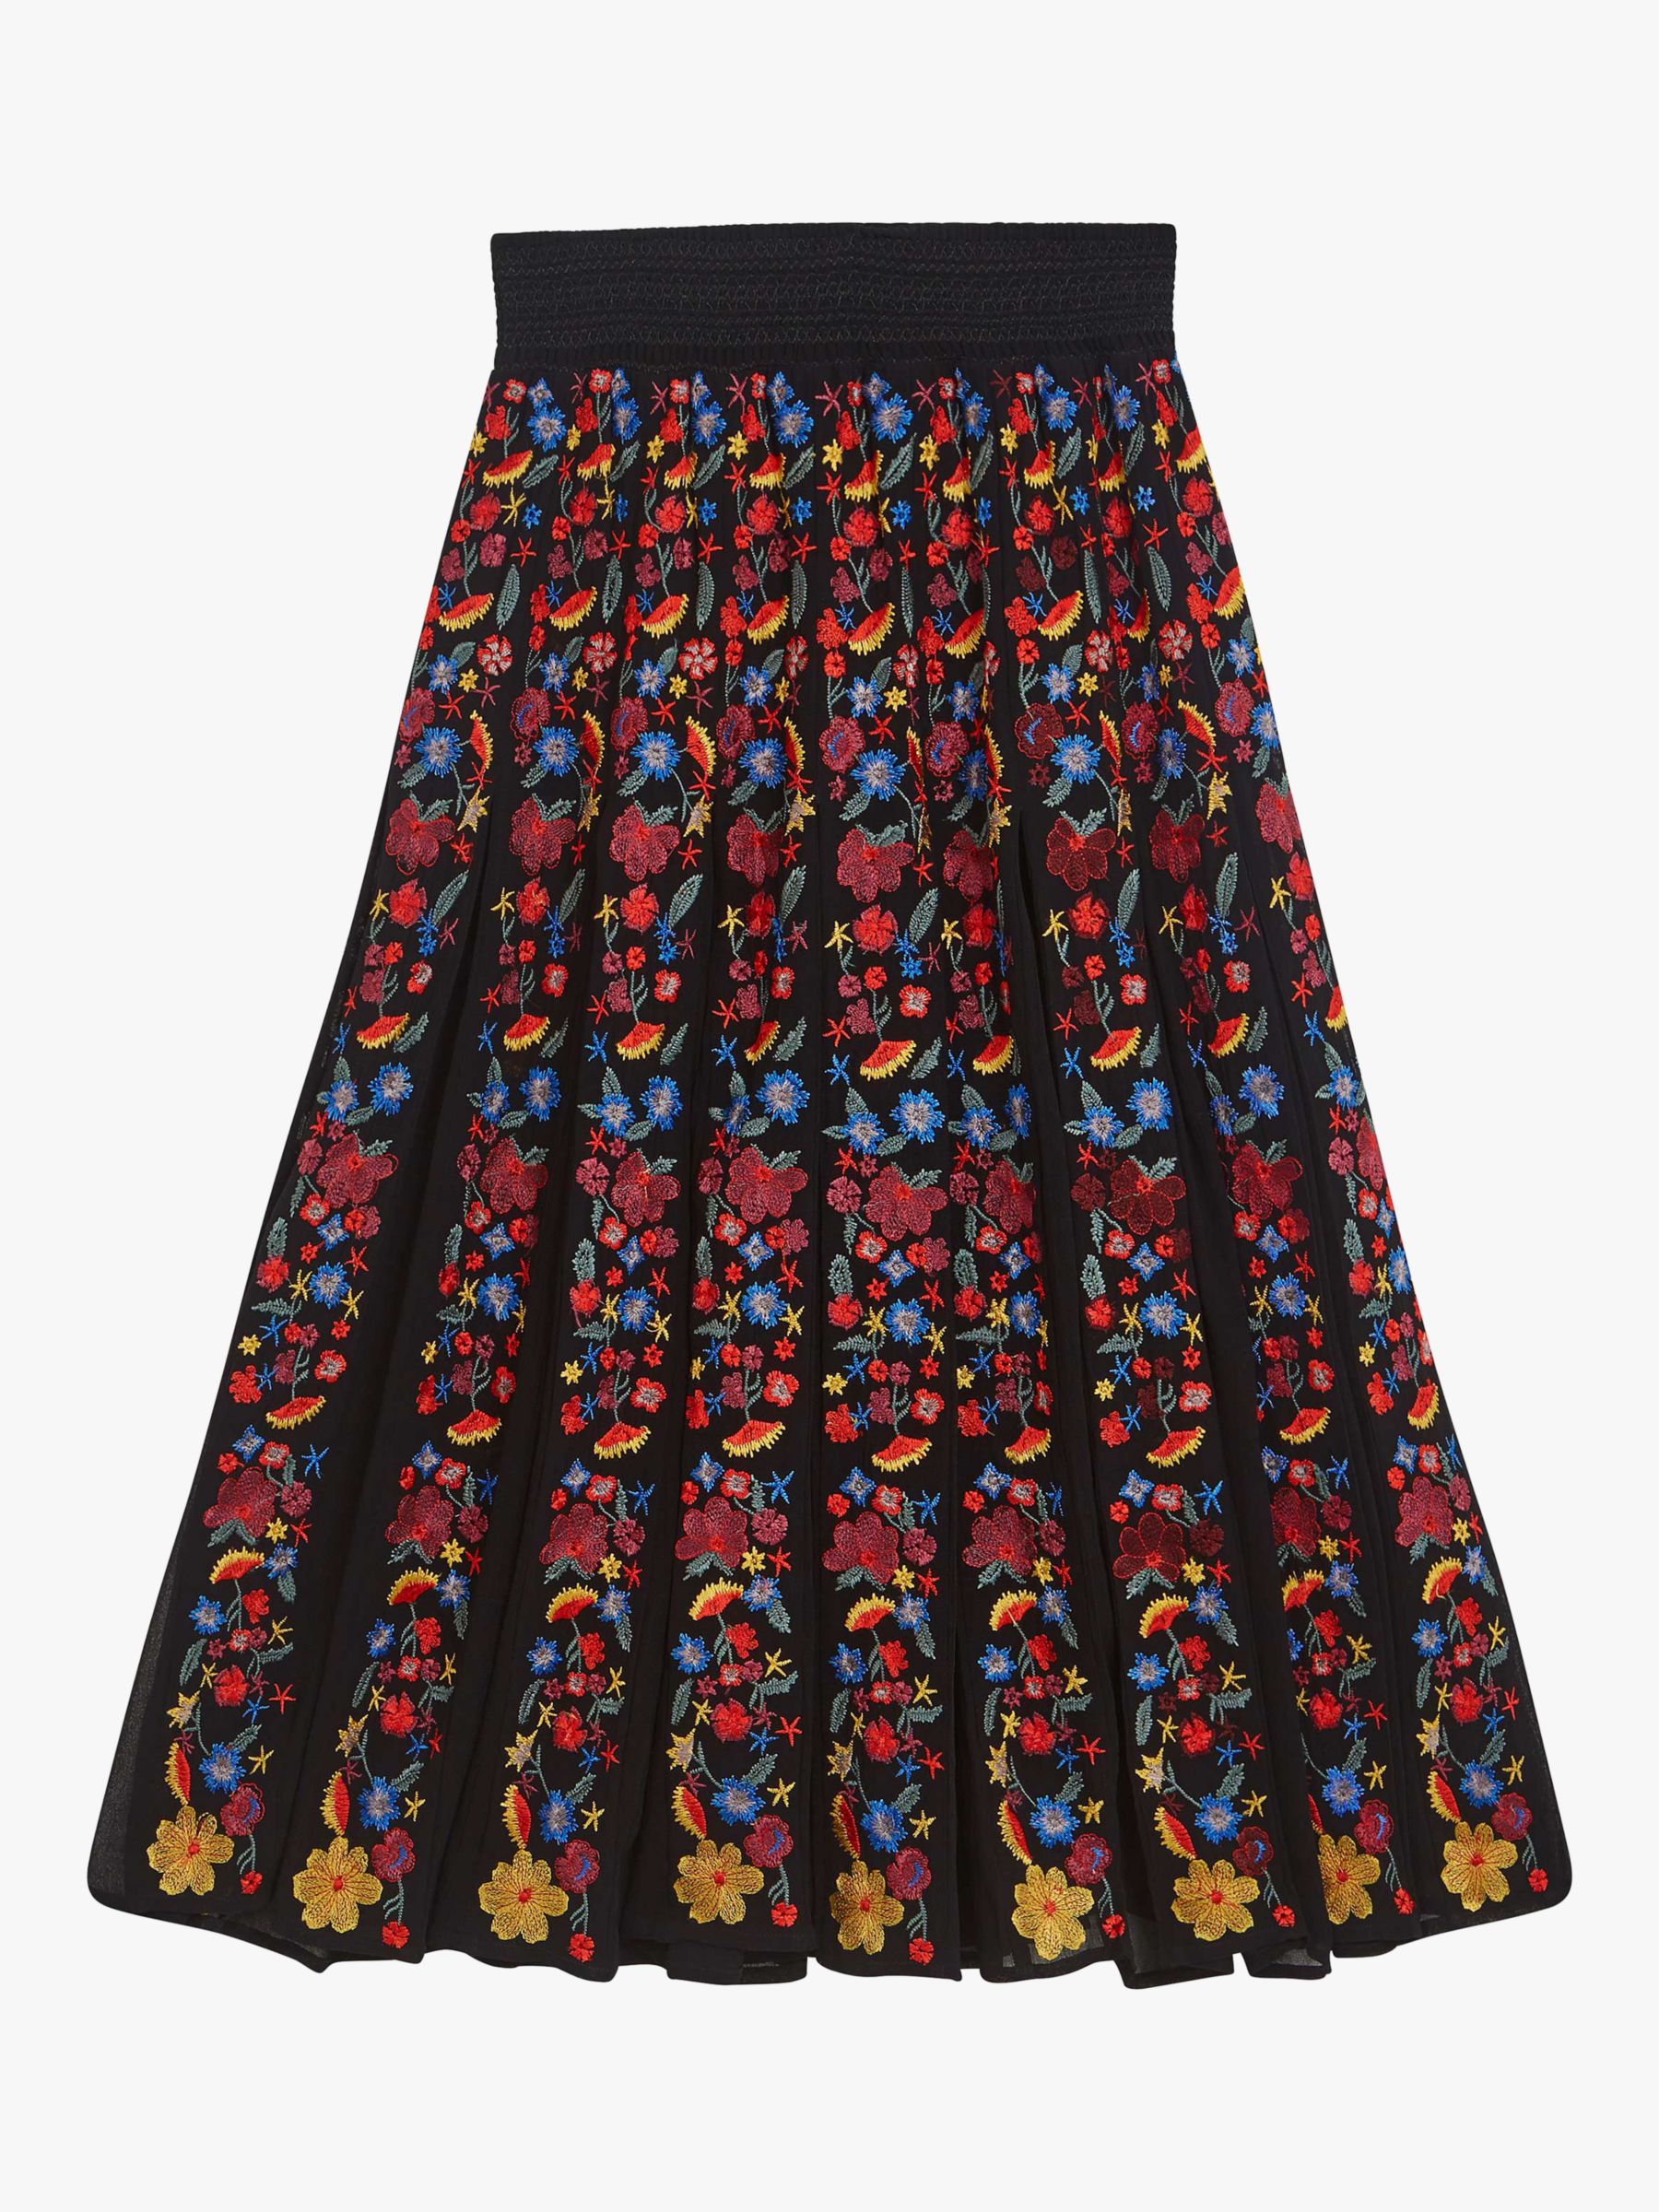 Brora Floral Embroidered Folk Skirt, Black at John Lewis & Partners